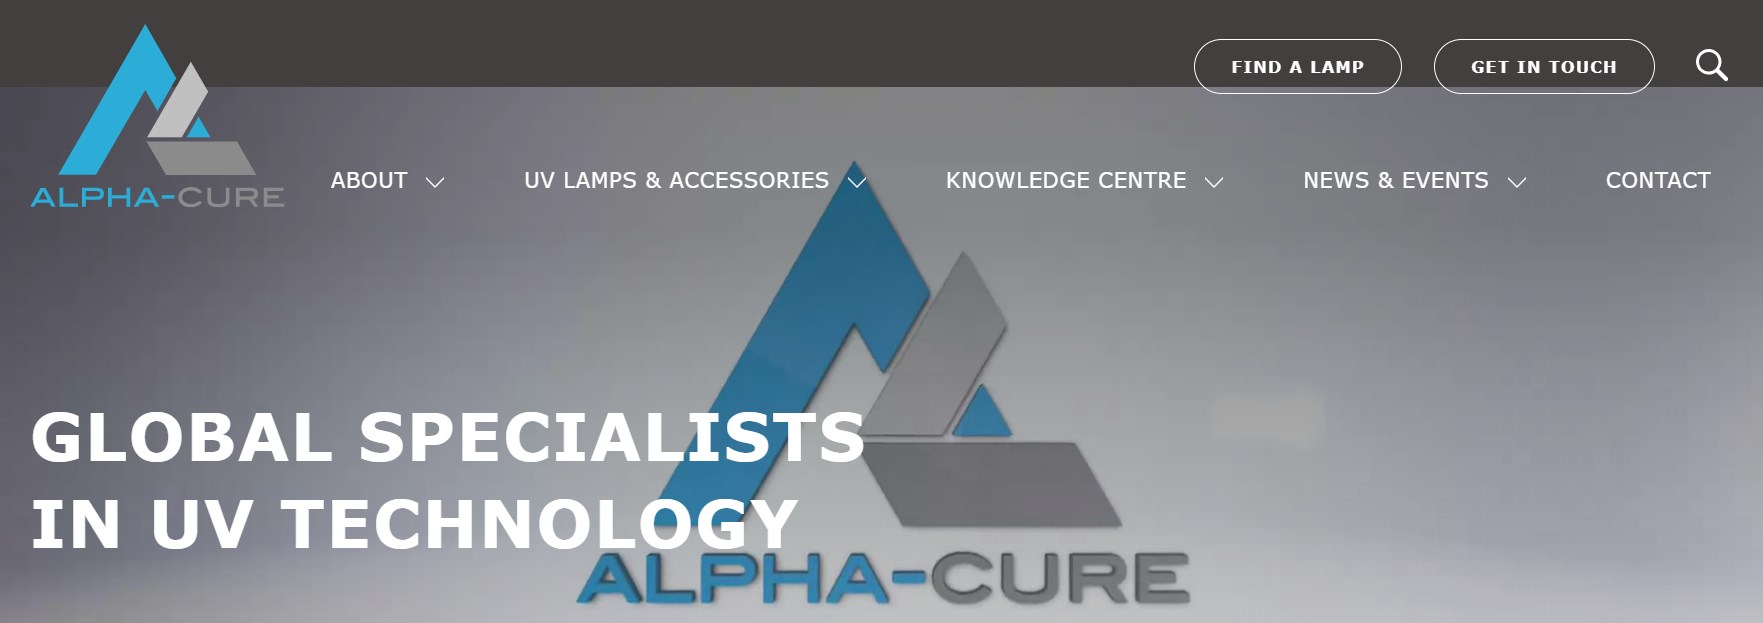 ALPHA-CURE curing lamp manufacturer